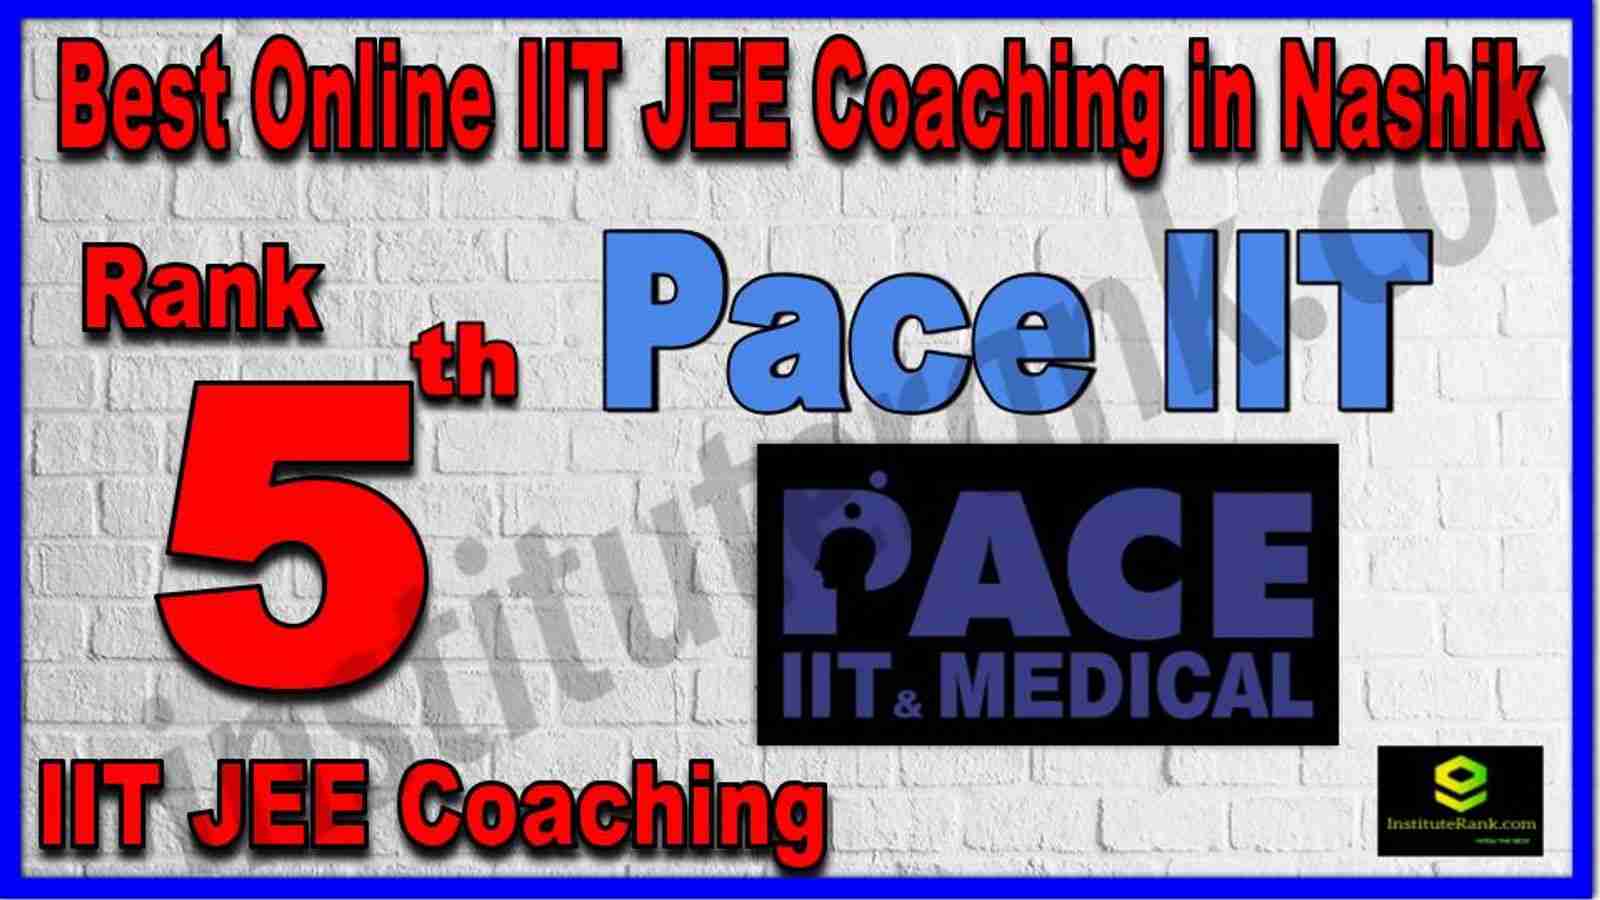 Rank 5th Best Online IIT JEE Coaching in Nashik